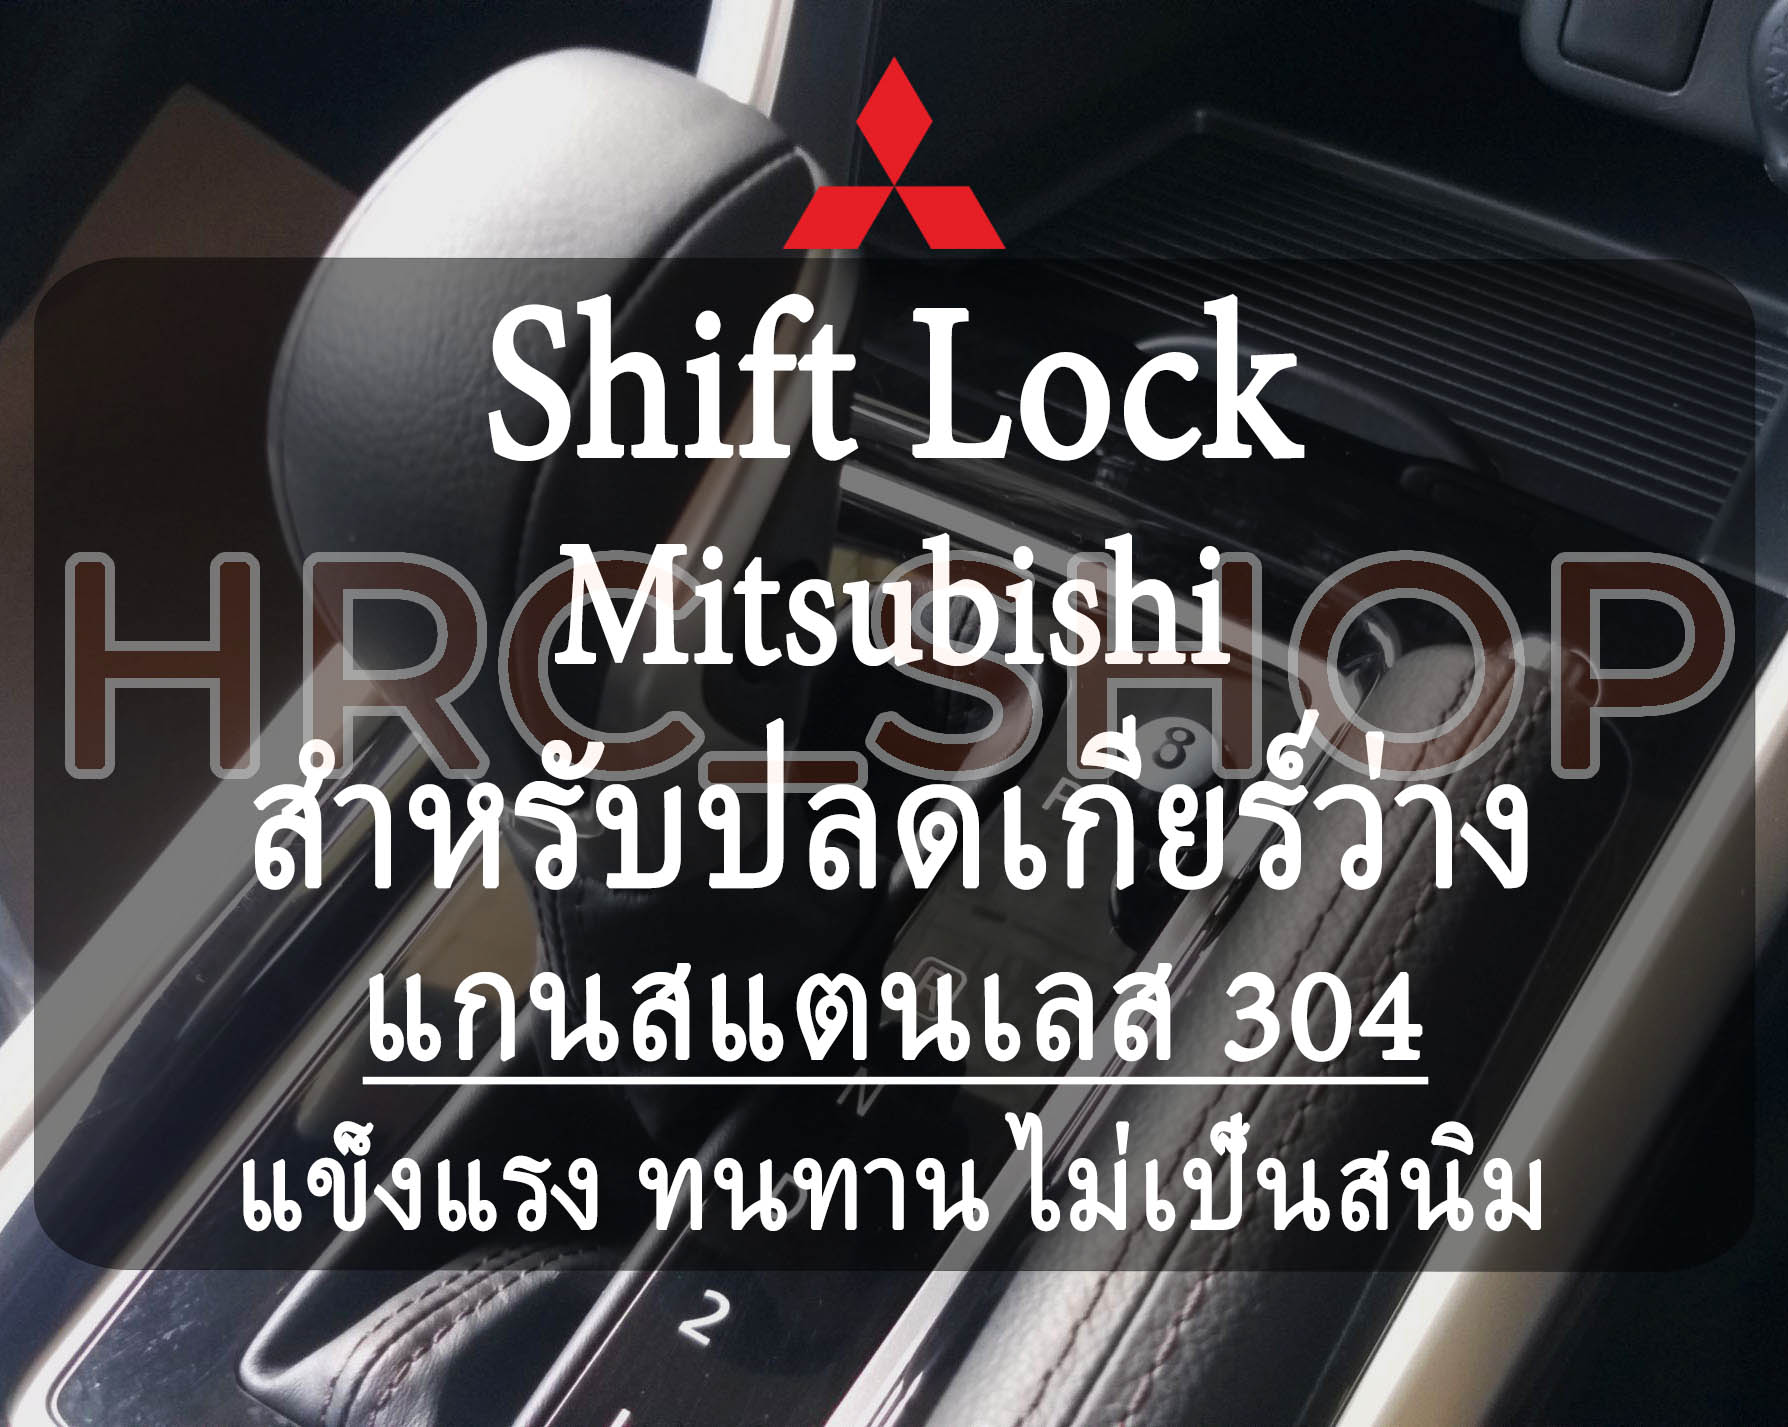 Shift Lock Mitsubishi Mirage / Attrage / Triton / Pajero / Xpander GT / Cross แกนสแตนเลส 304 สำหรับปลดเกียร์ว่าง ชิฟท์ล็อก มิตซูบิชิ